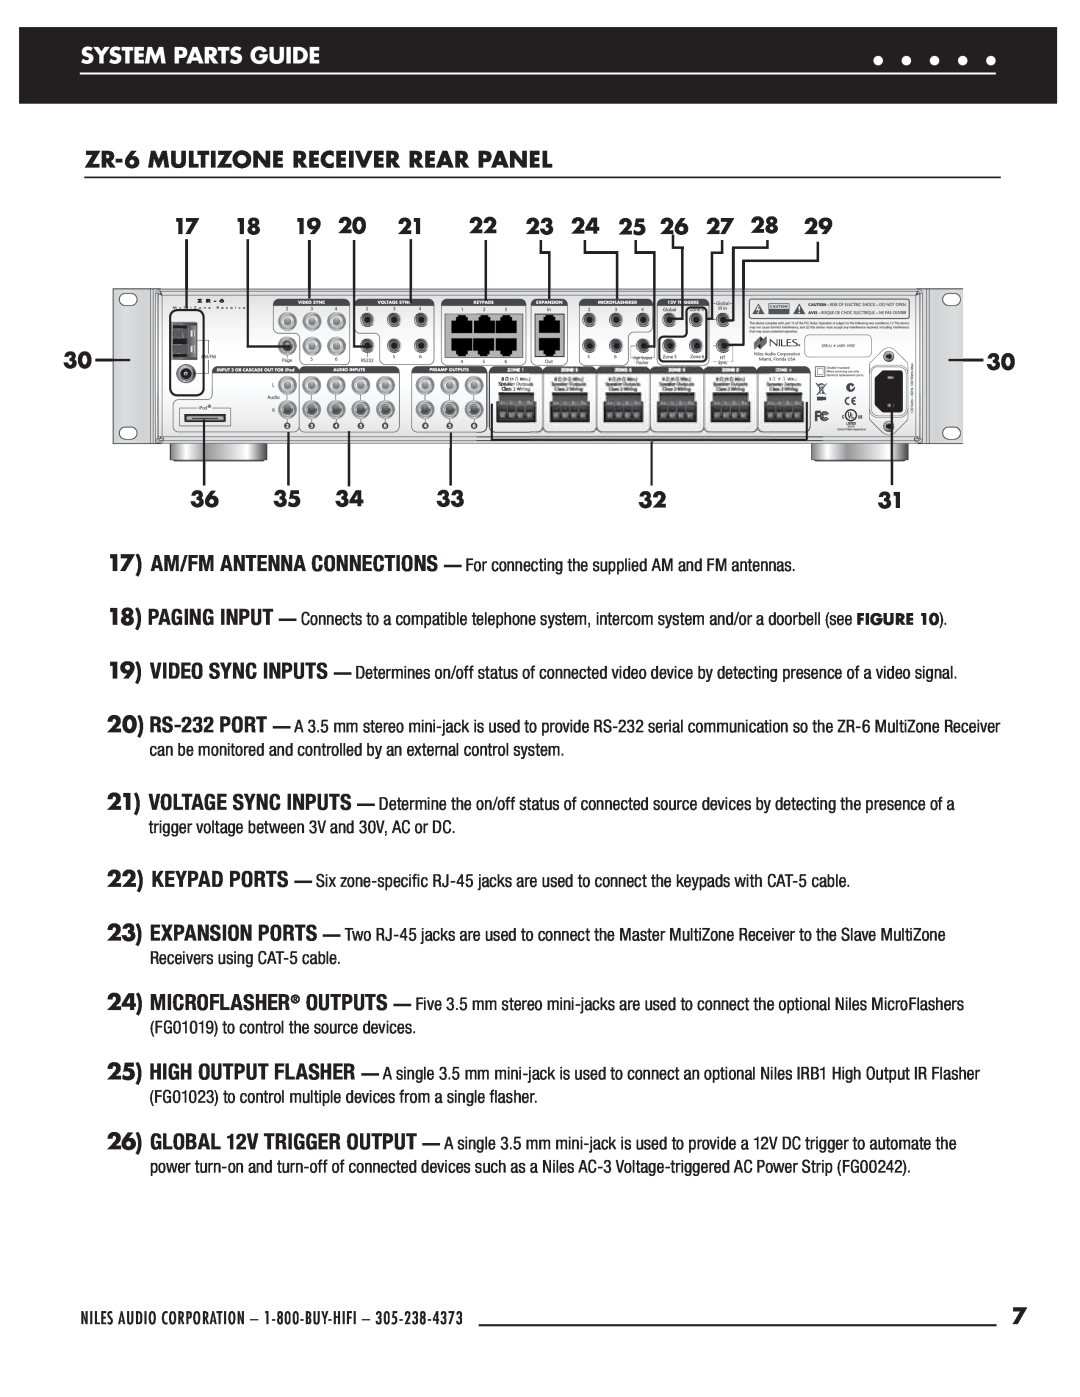 Niles Audio manual ZR-6MULTIZONE RECEIVER REAR PANEL, 17 18 19 20 21 22 23 24 25 26 27 28, System Parts Guide 